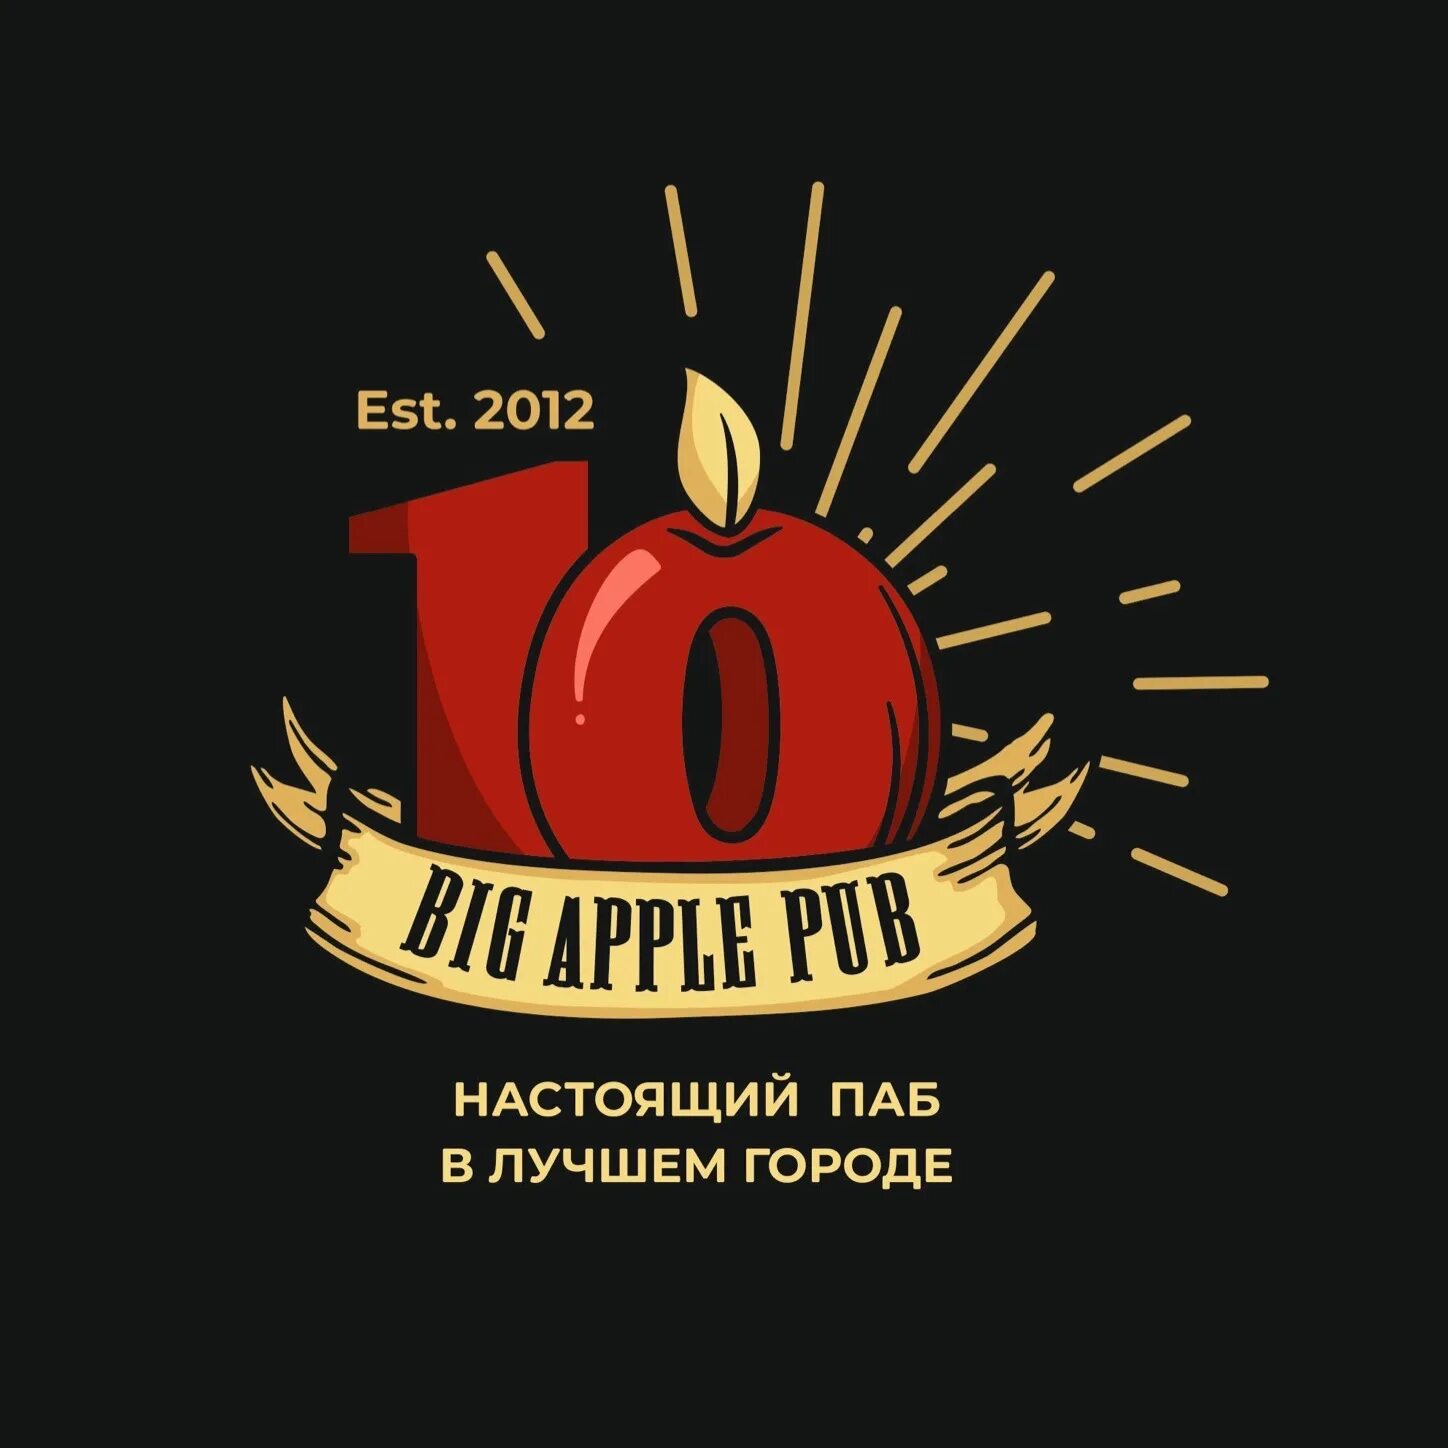 Https fcsemonitor ru pub 2023. Big Apple pub Тюмень. Pub Apple Москва. Эппл Биг Чита. ПАБГ 2023.